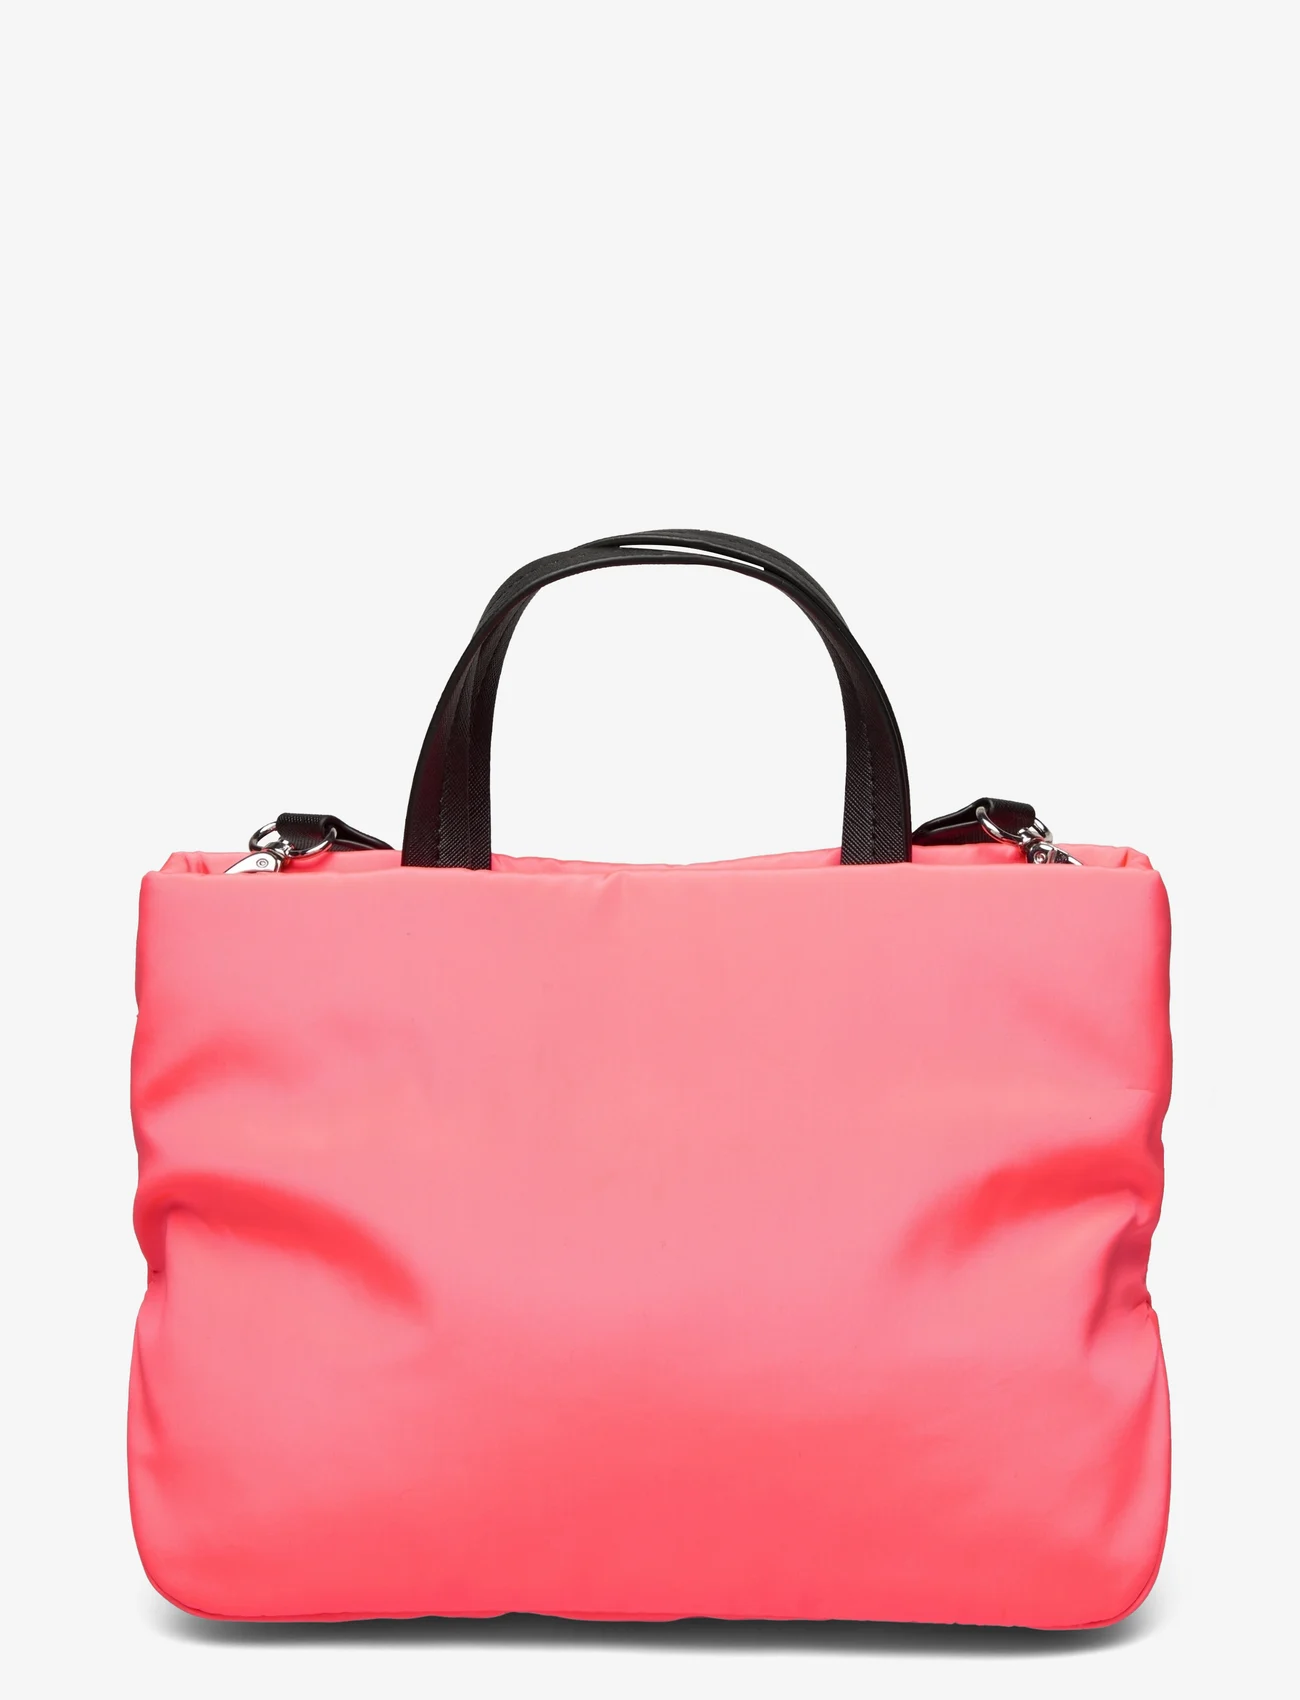 DAY ET - Day Buffer Bag S - diva pink - 1